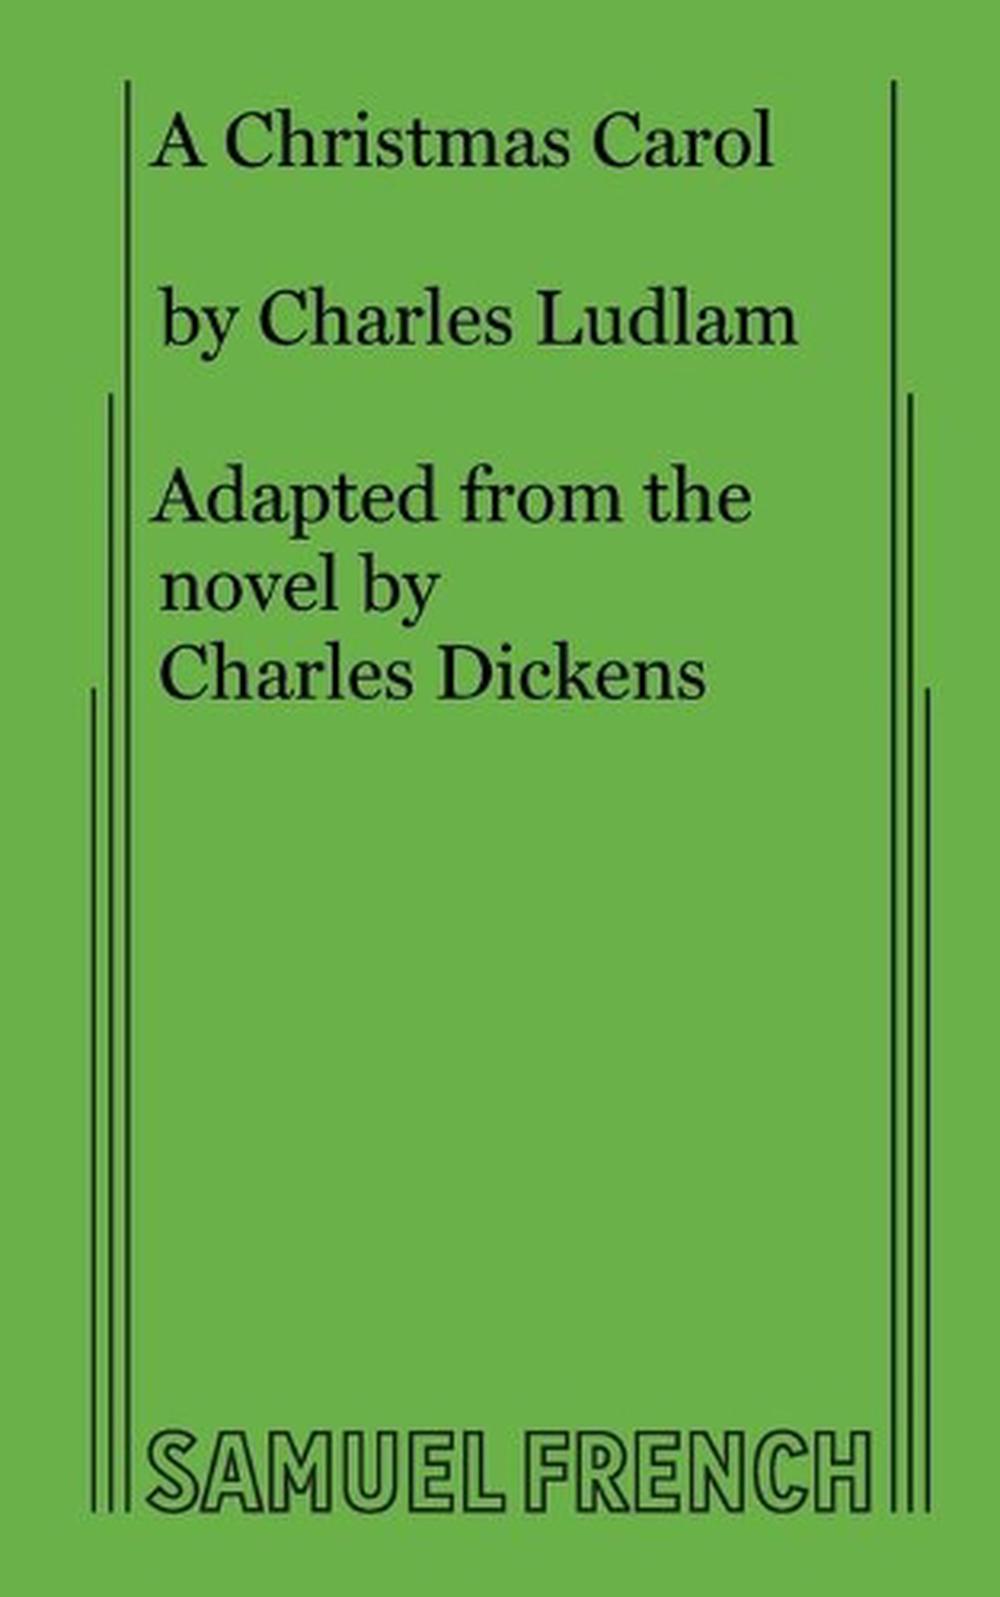 A Christmas Carol by Charles Ludlam (English) Paperback Book Free Shipping! 9780573698651 | eBay